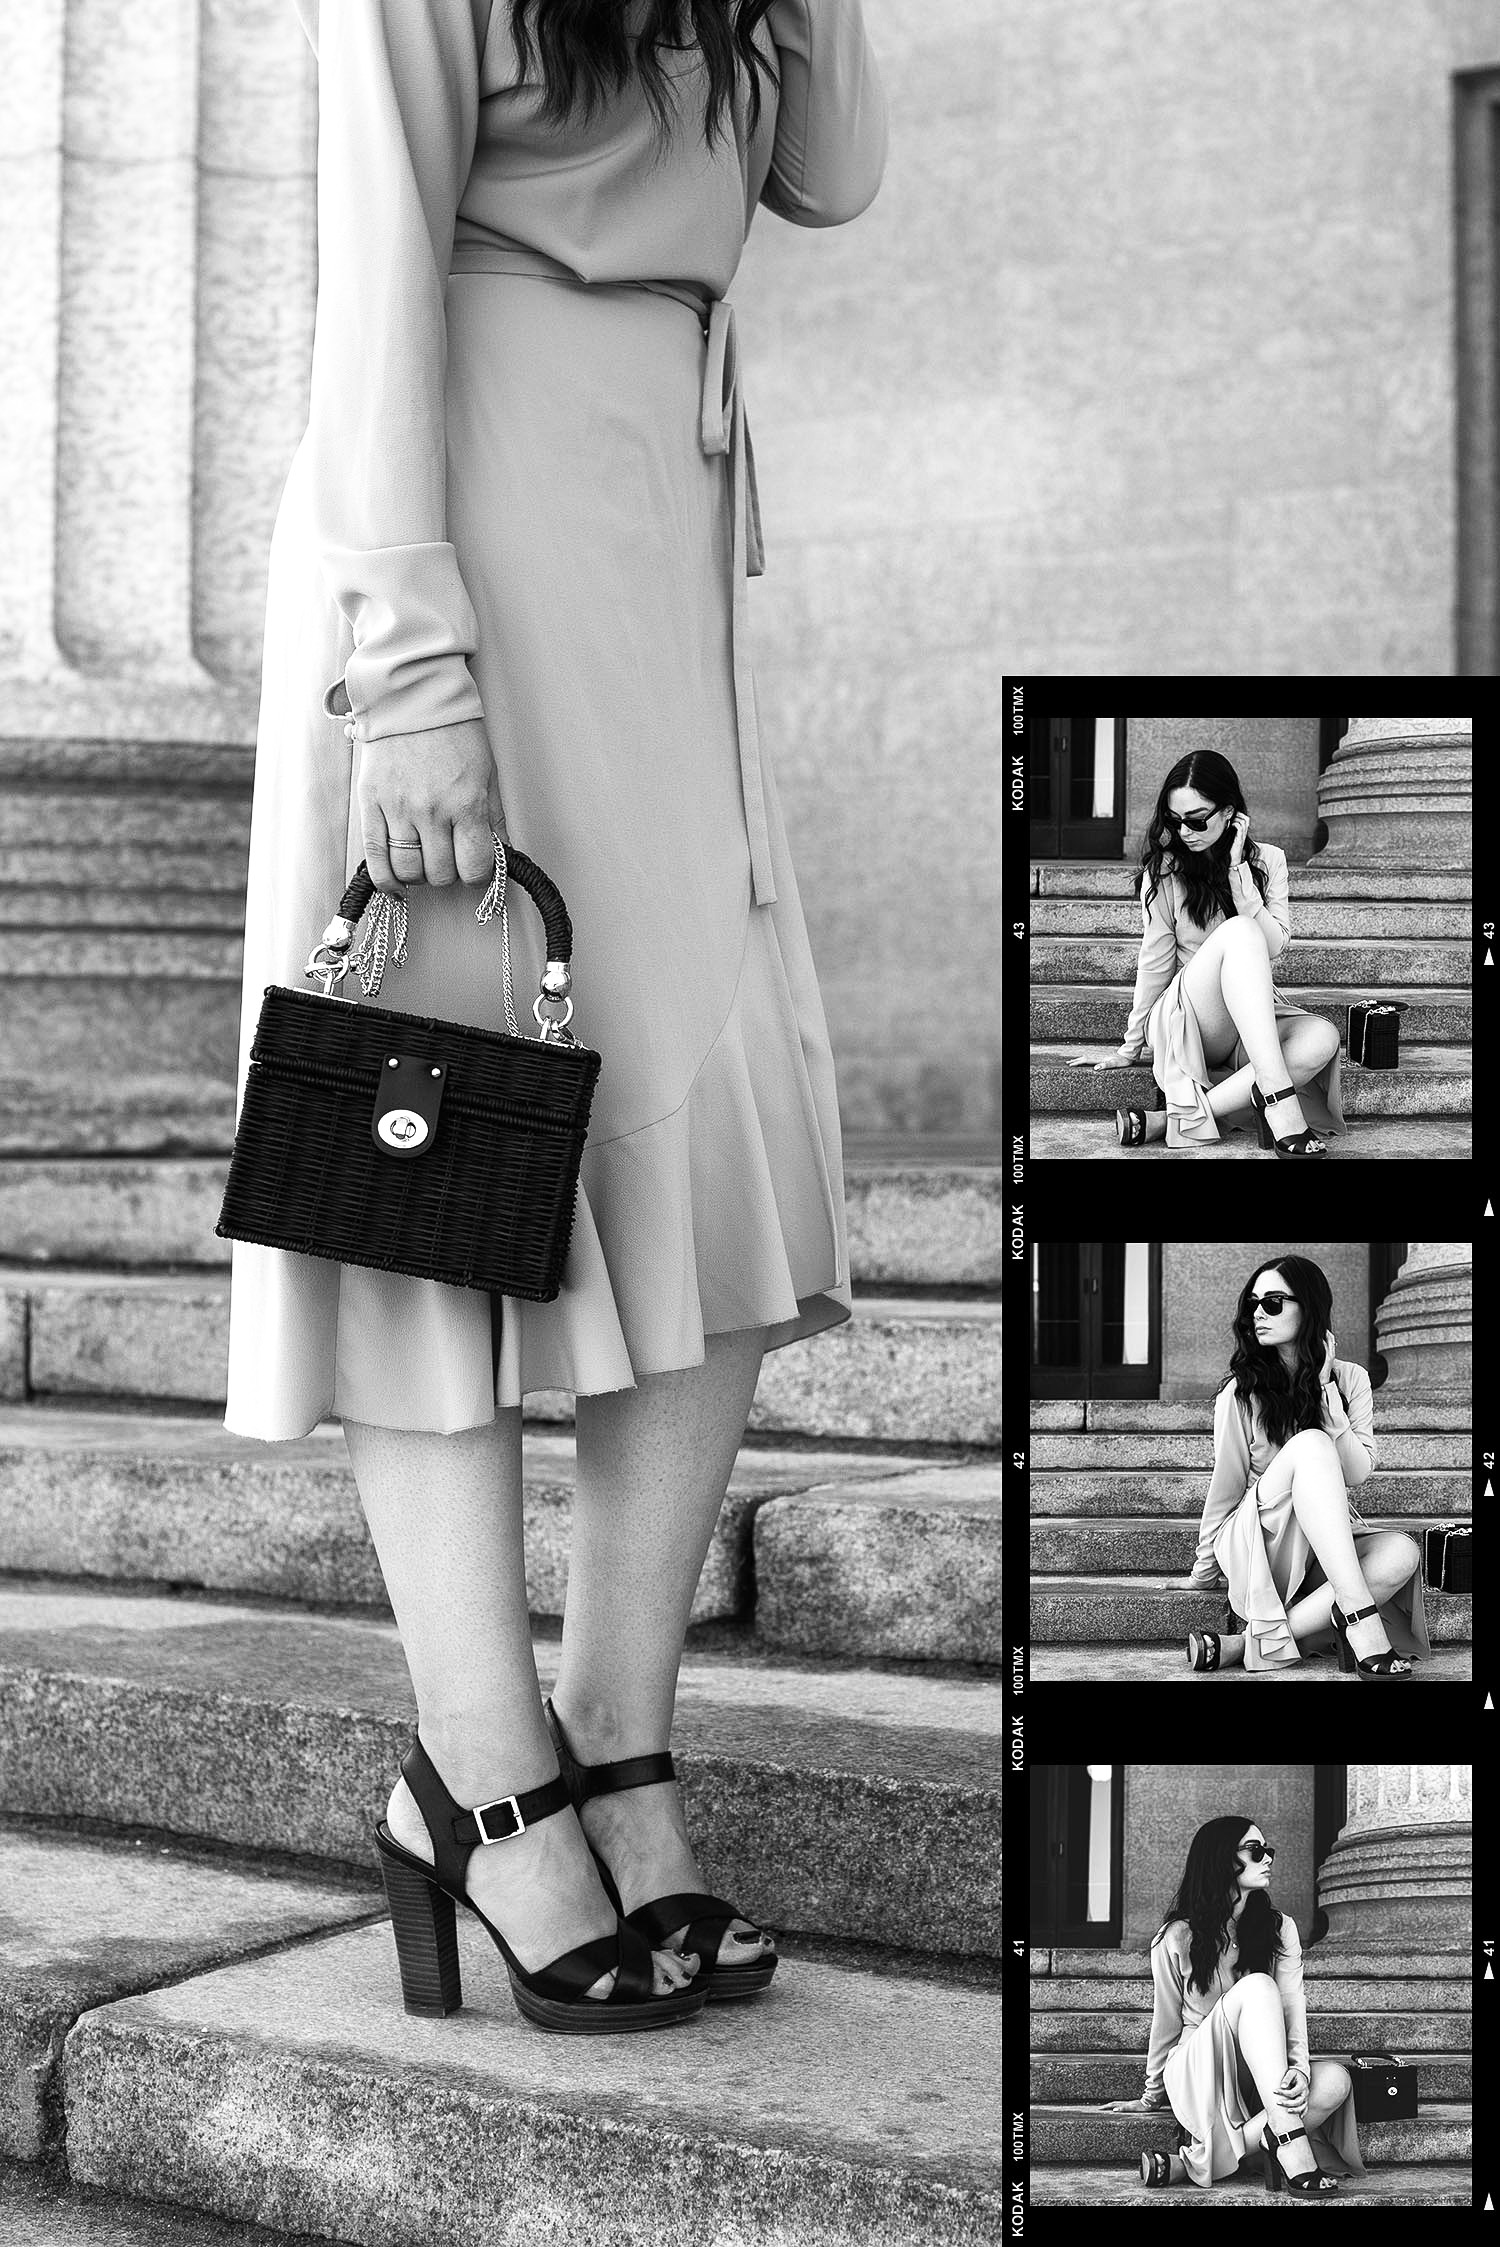 coco-and-vera-top-winnipeg-fashion-blog-top-canadian-fashion-blog-top-blogger-street-style-aritzia-dress-le-chateau-sandals